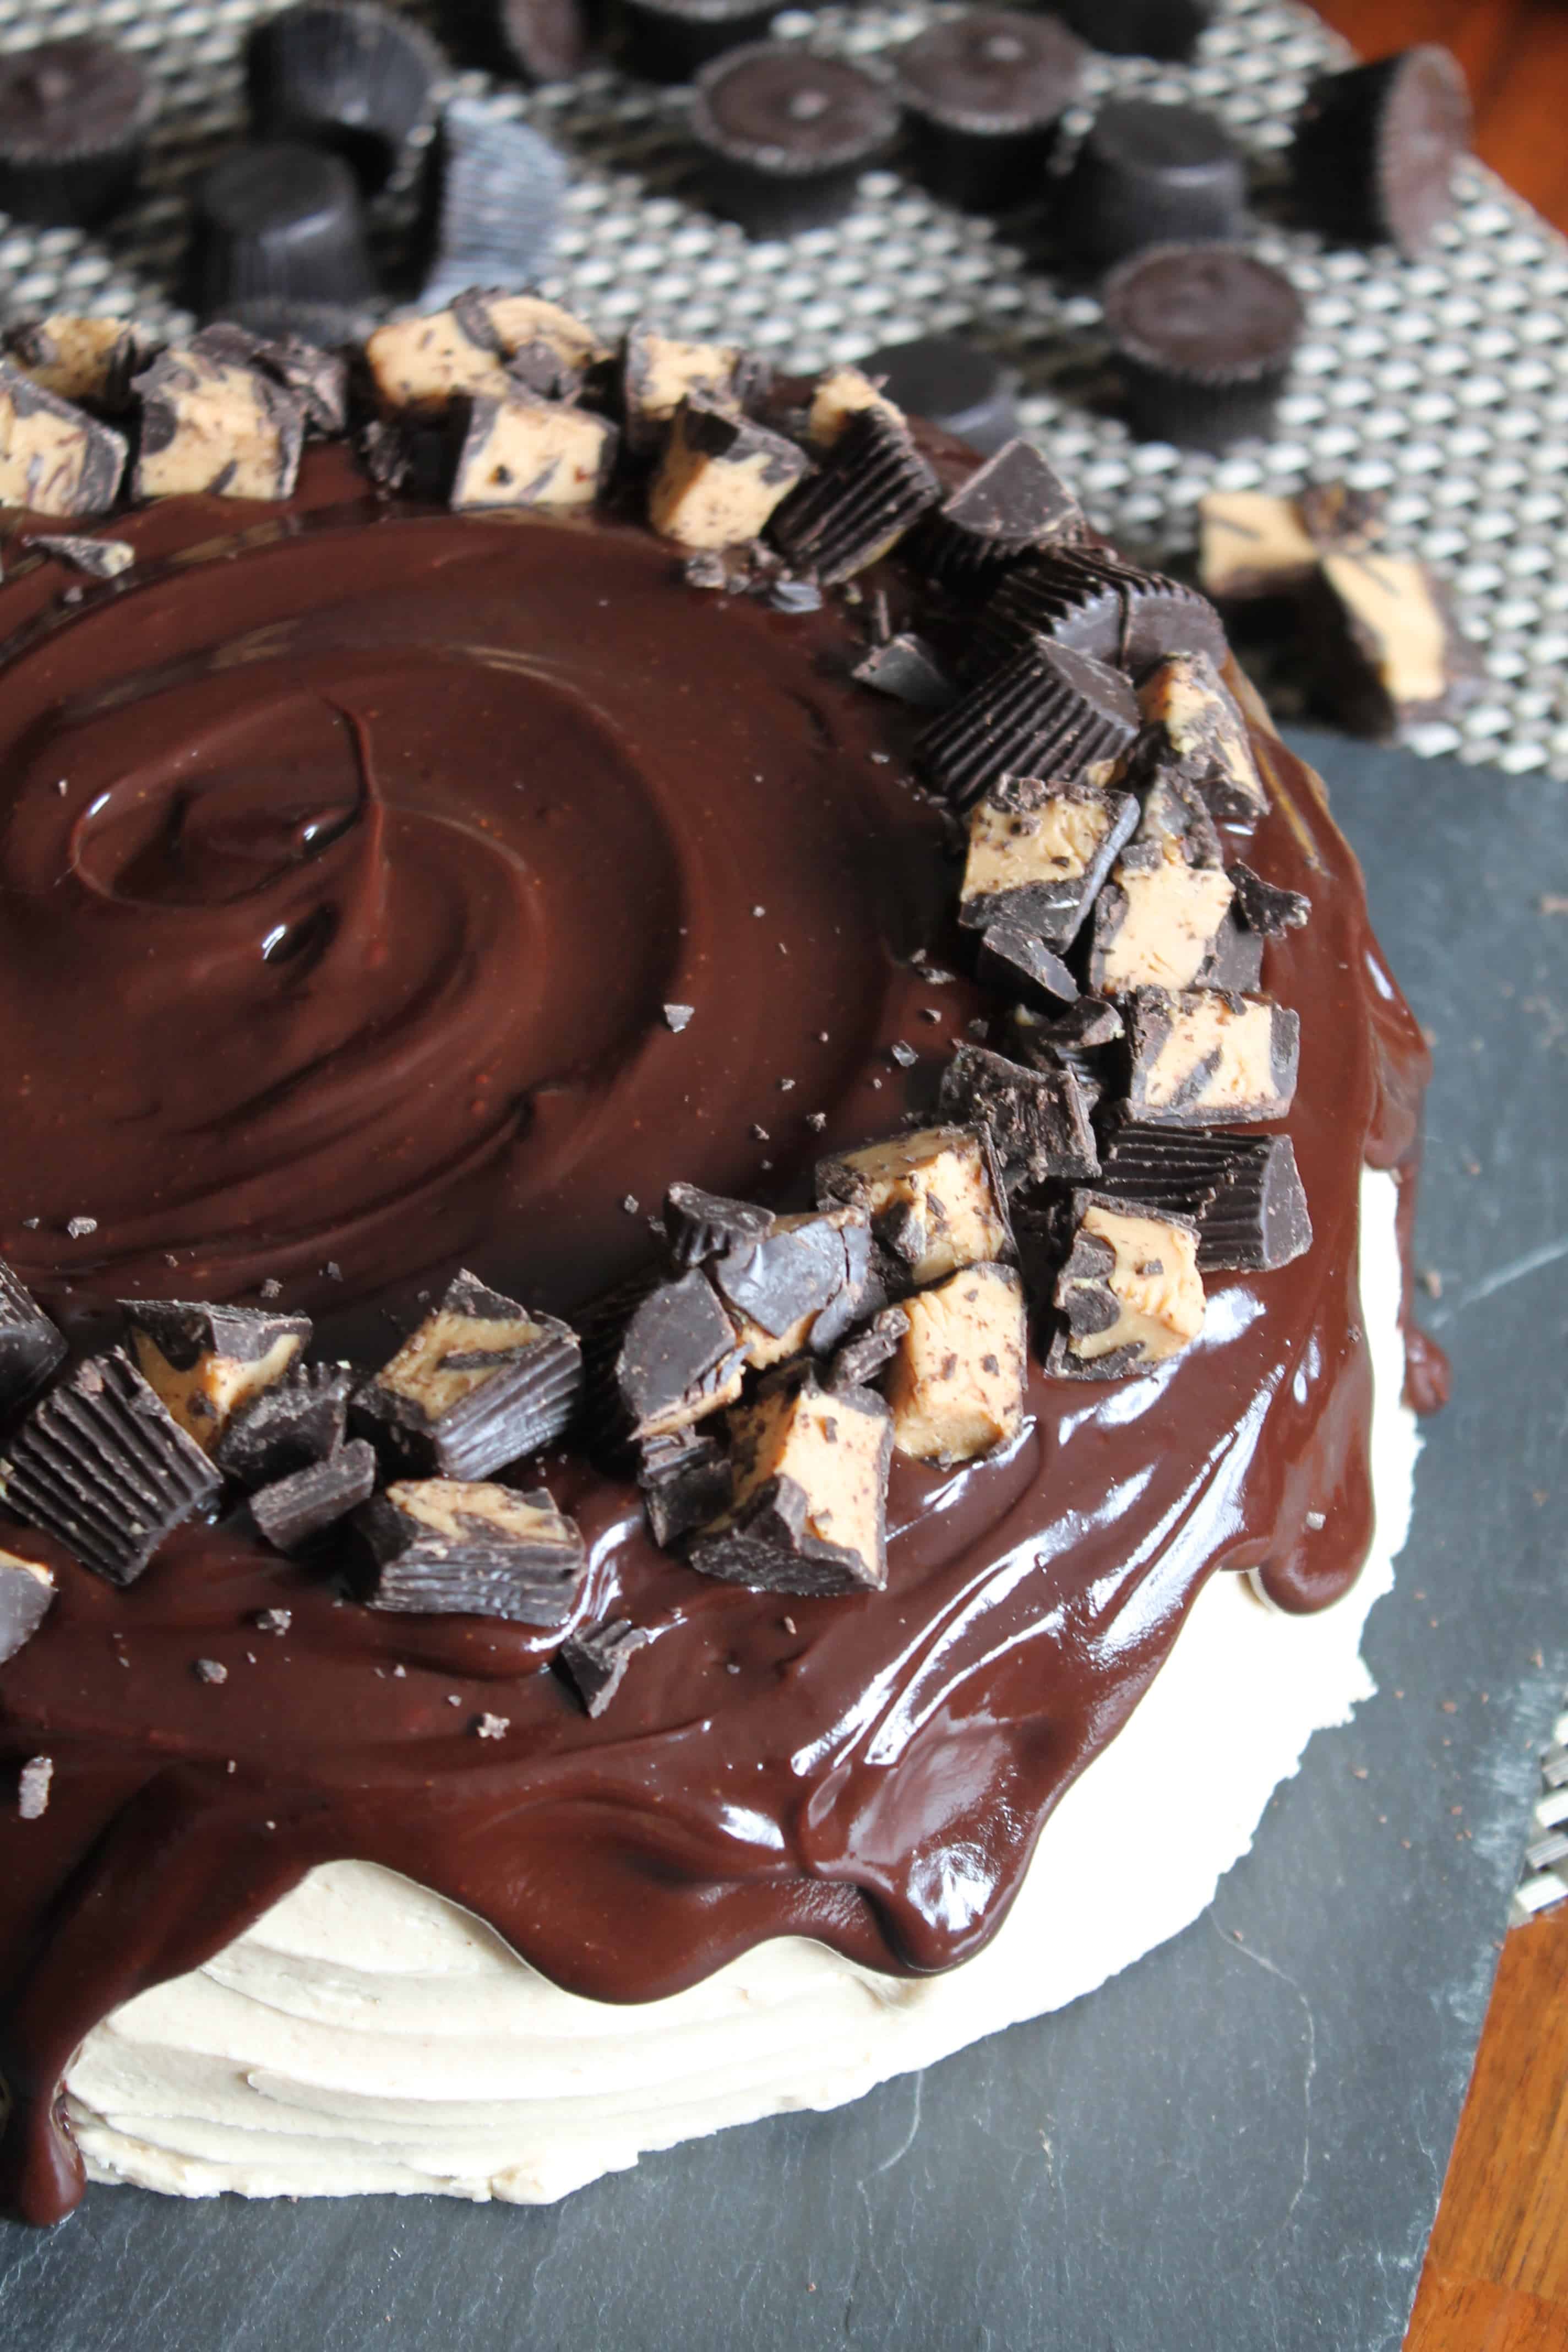 https://www.thespiffycookie.com/wp-content/uploads/2015/03/Dark-Chocolate-Peanut-Butter-Cup-Cake-1.jpg